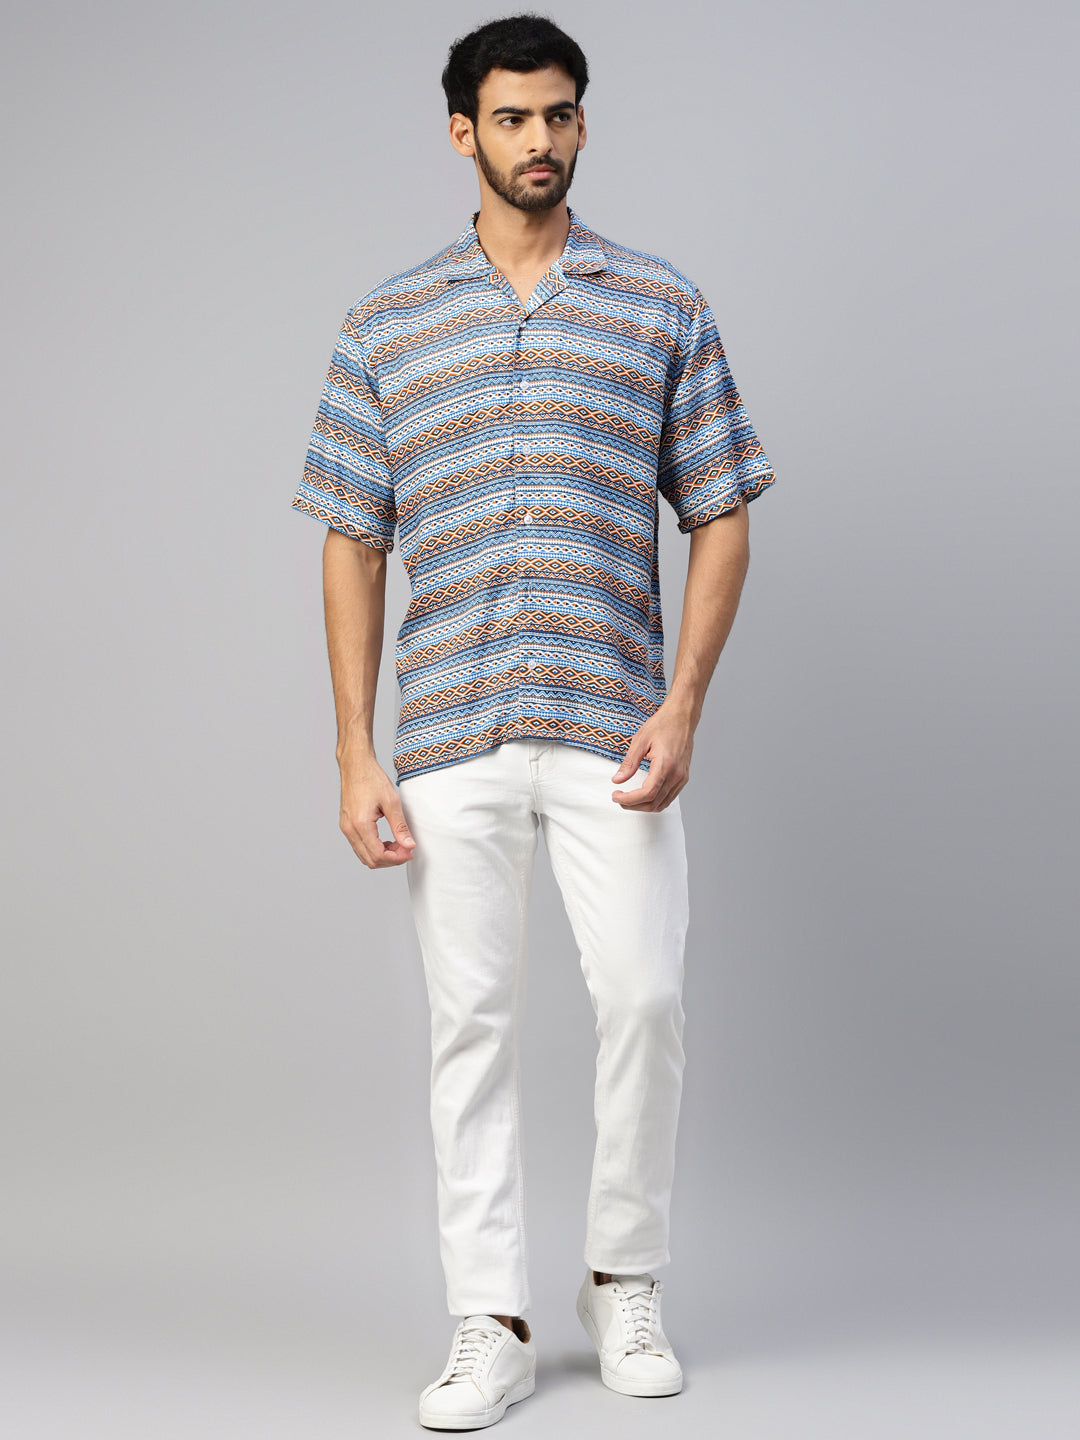 Don Vino Men's Multi-Color Slim Fit Resort Shirt